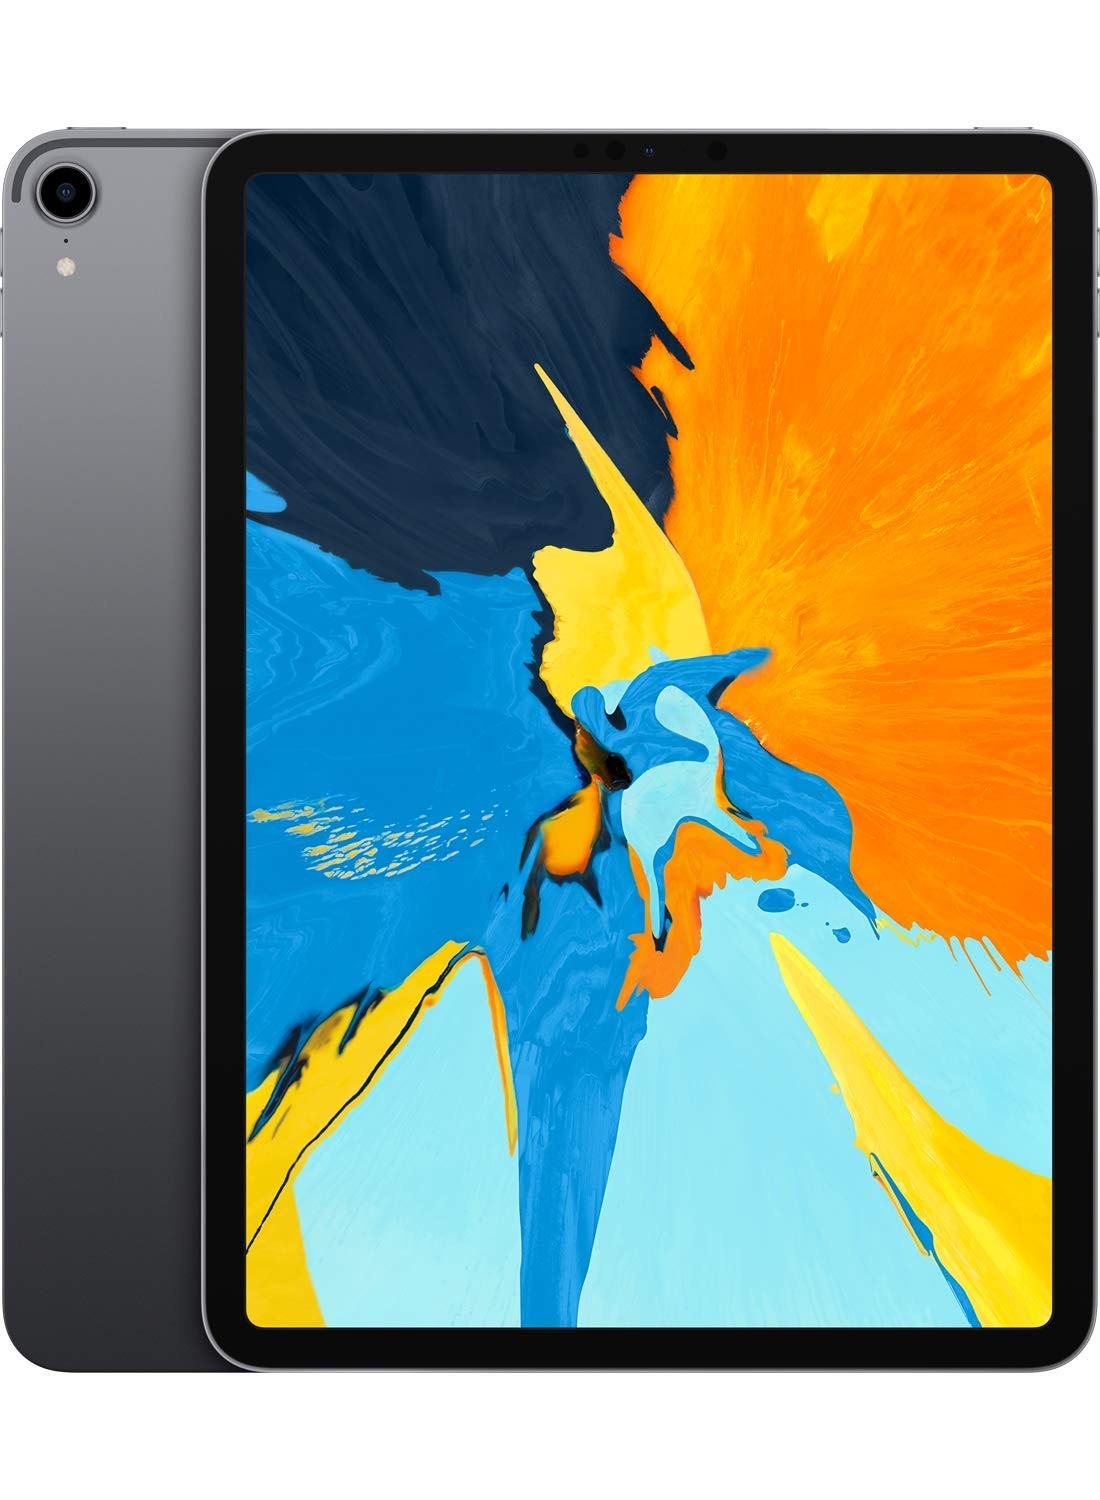 Apple iPad Pro (11-inch, Wi-Fi, 256GB) - Space Gray (Latest Model)